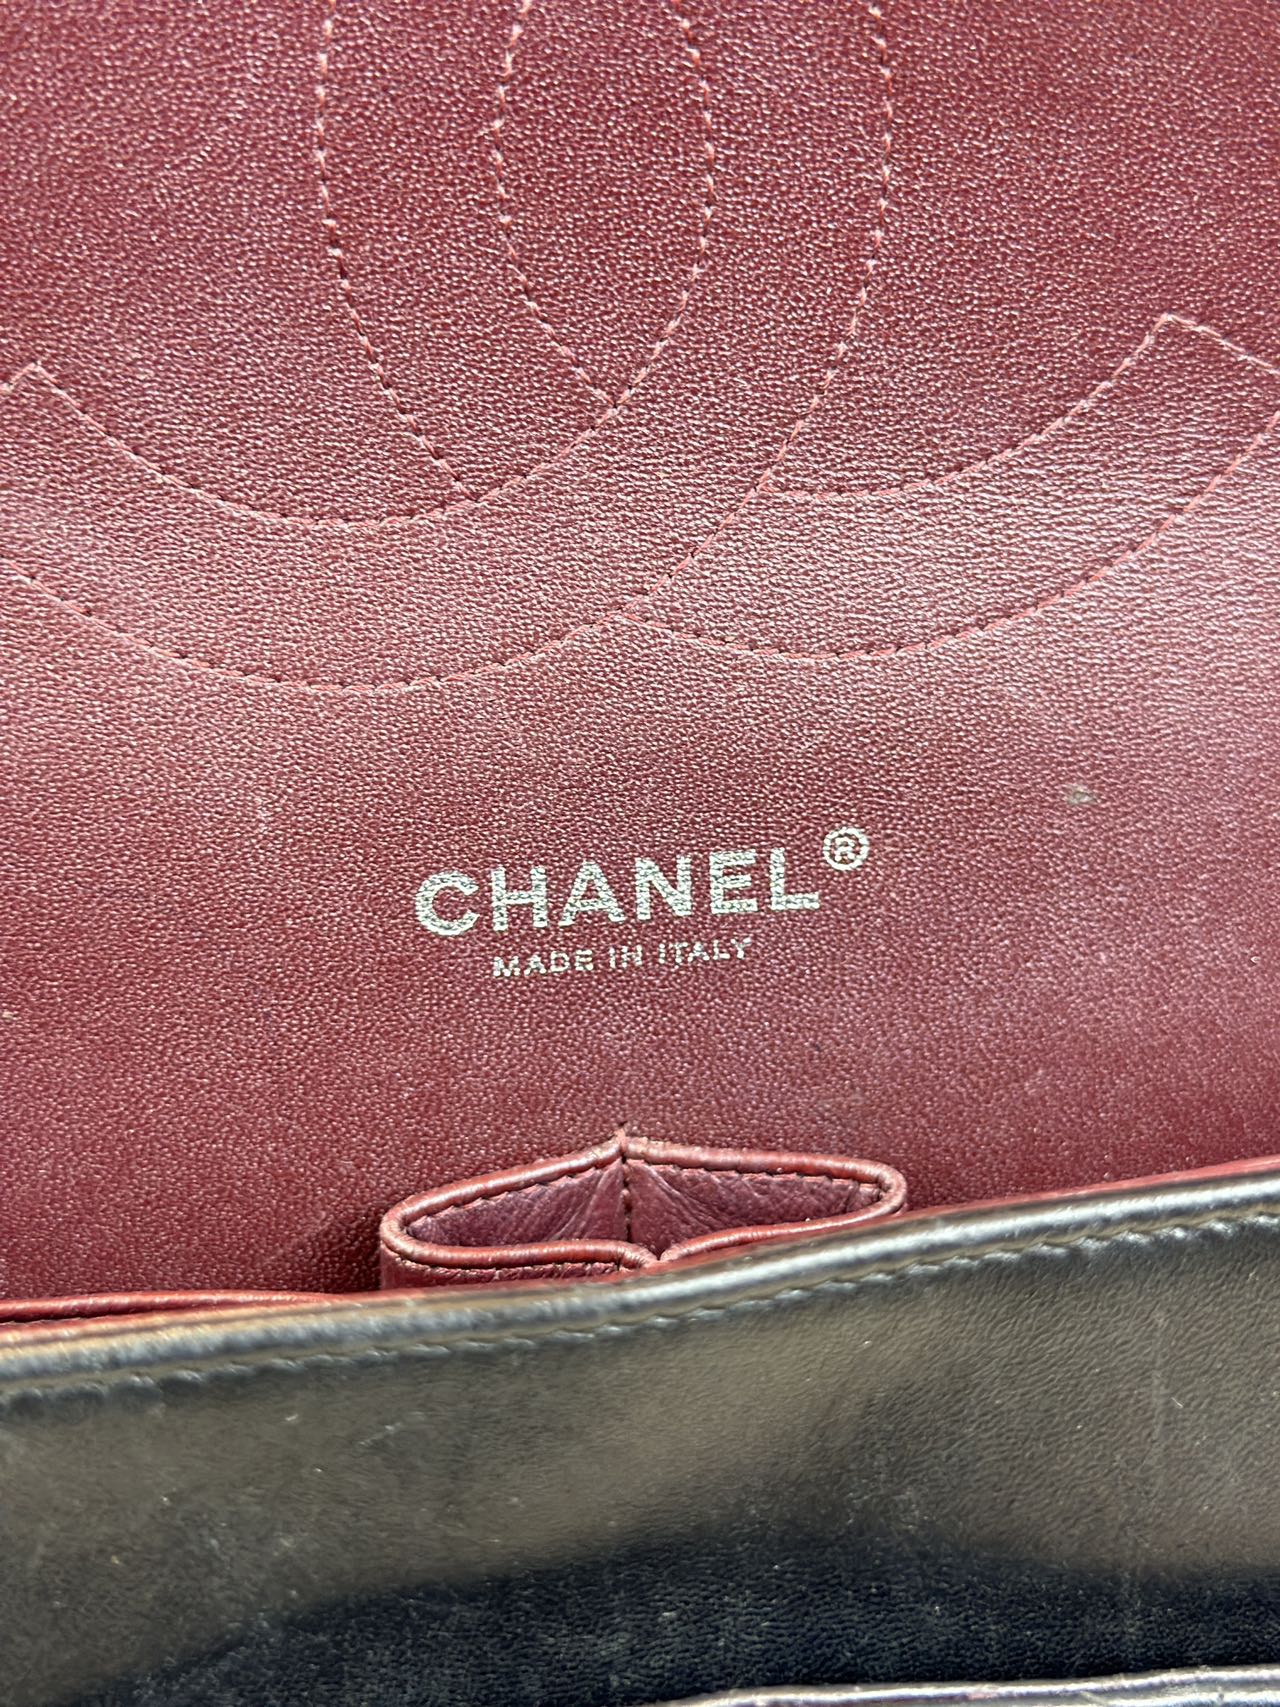 Preloved Chanel Black Leather Lambskin Double Flap Jumbo Shoulder Bag